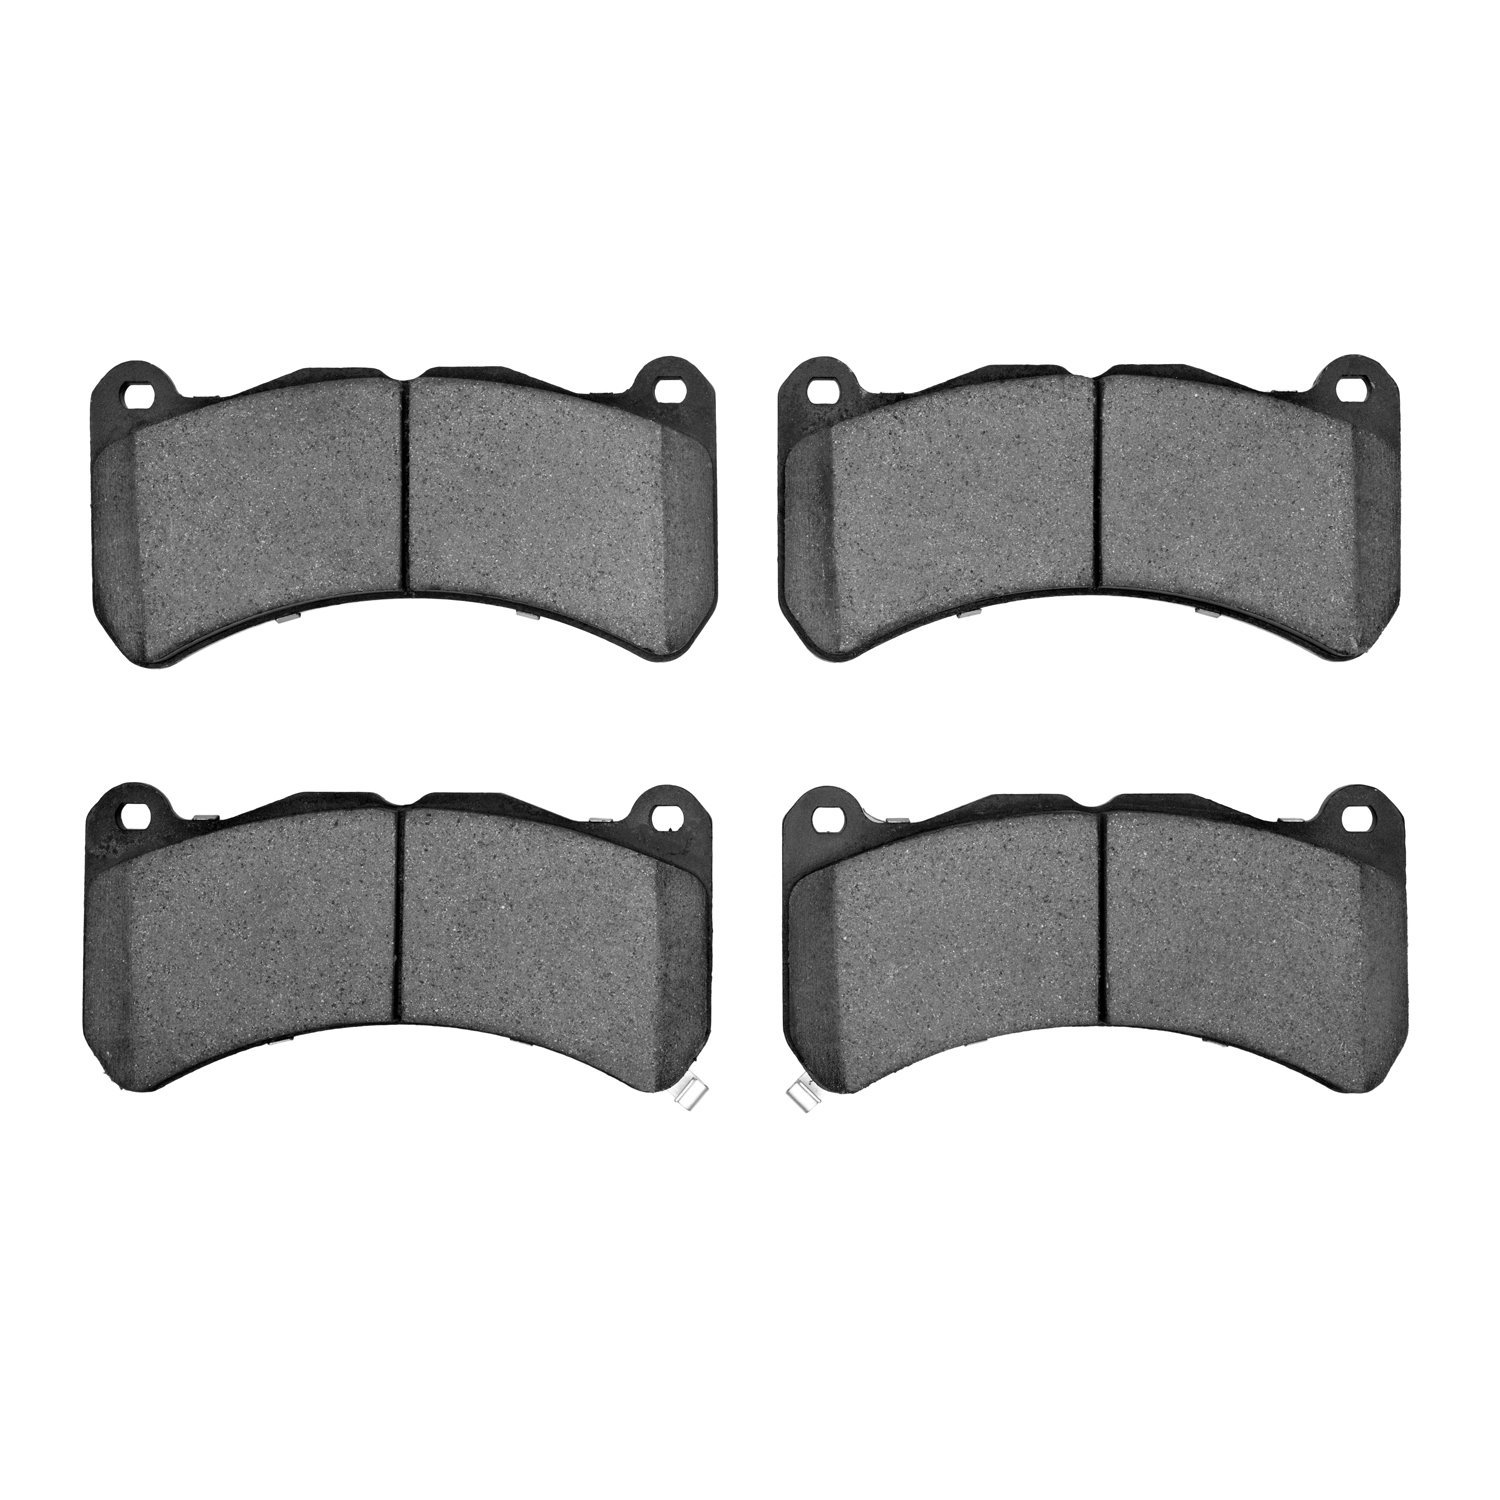 1310-1365-00 3000-Series Ceramic Brake Pads, 2008-2021 Multiple Makes/Models, Position: Front